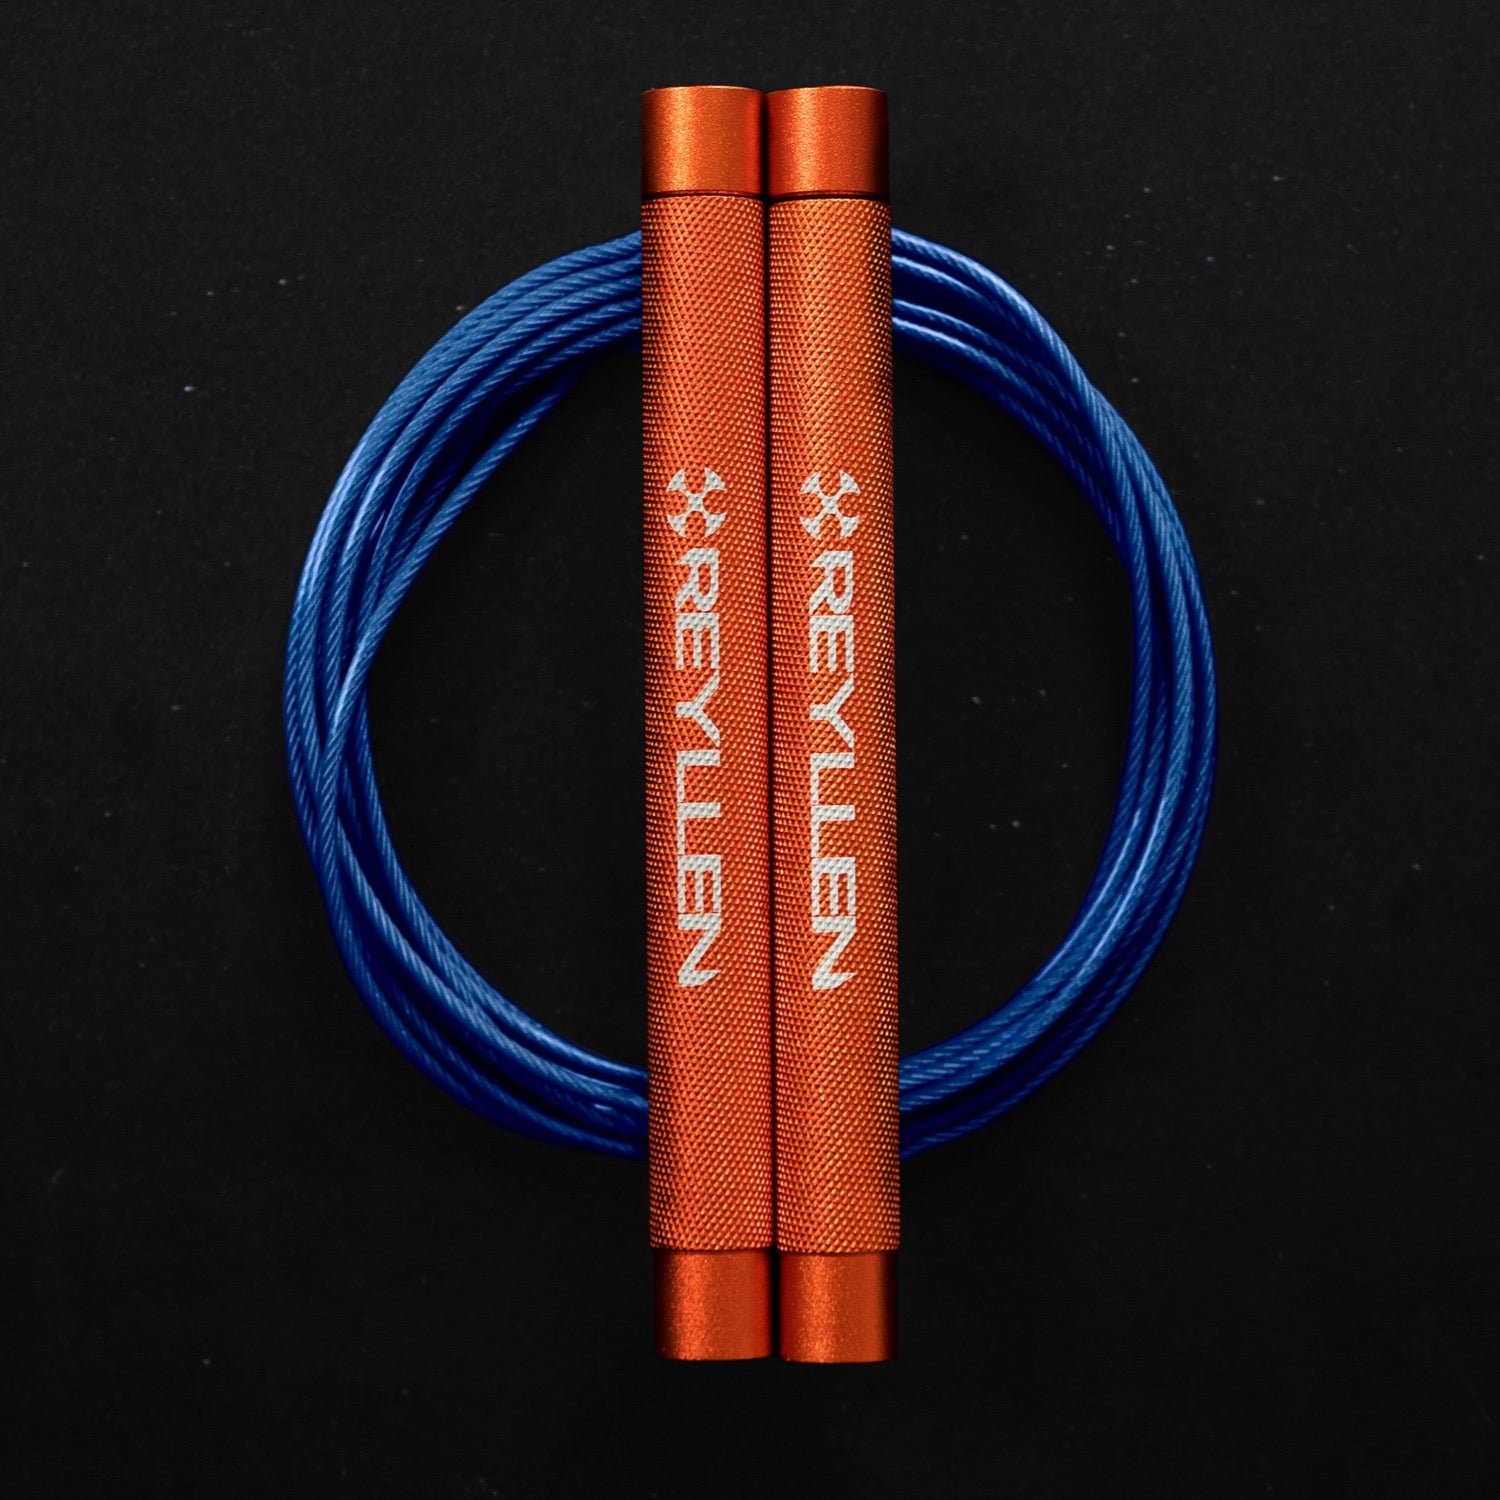 Reyllen Flare Mx Speed Skipping Jump Rope - Aluminium Handles - orange with blue pvc cable